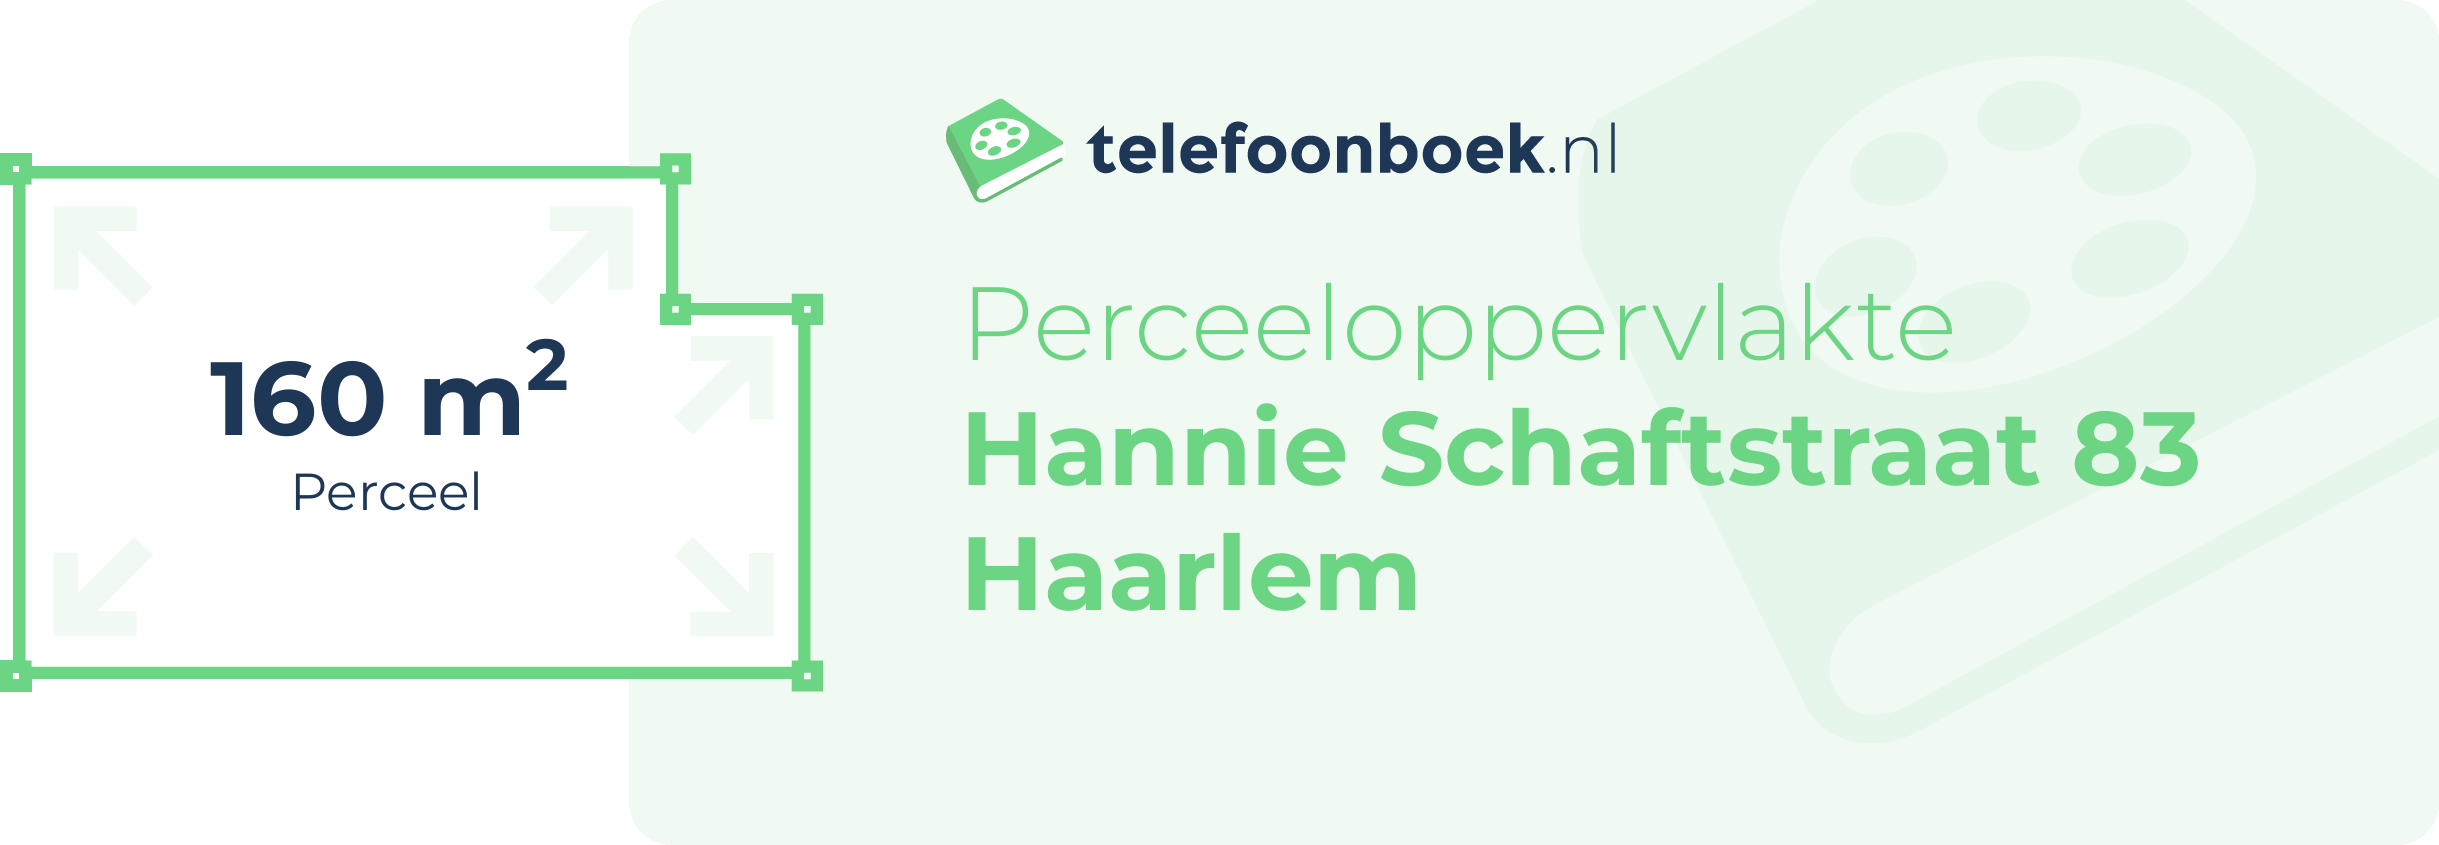 Perceeloppervlakte Hannie Schaftstraat 83 Haarlem